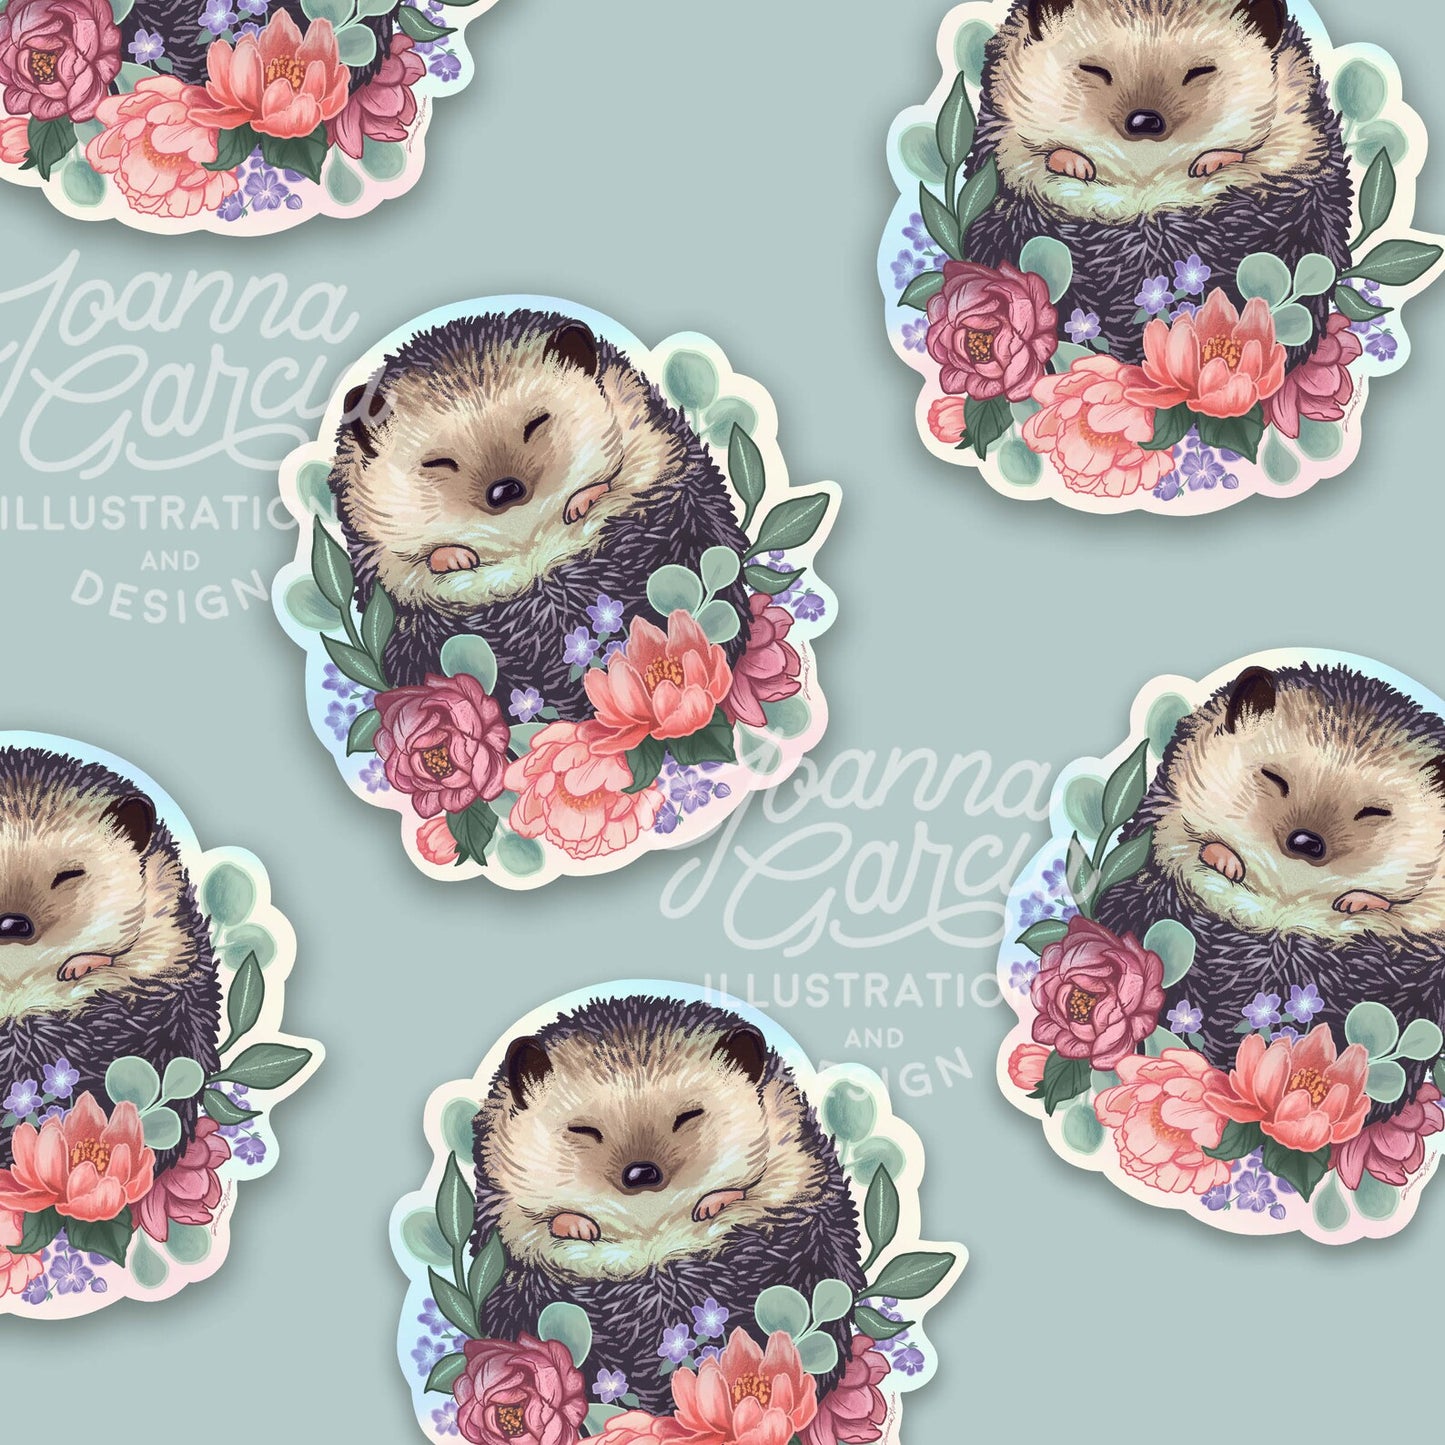 Holographic Hedgehog Vinyl Sticker - Joanna Garcia Art